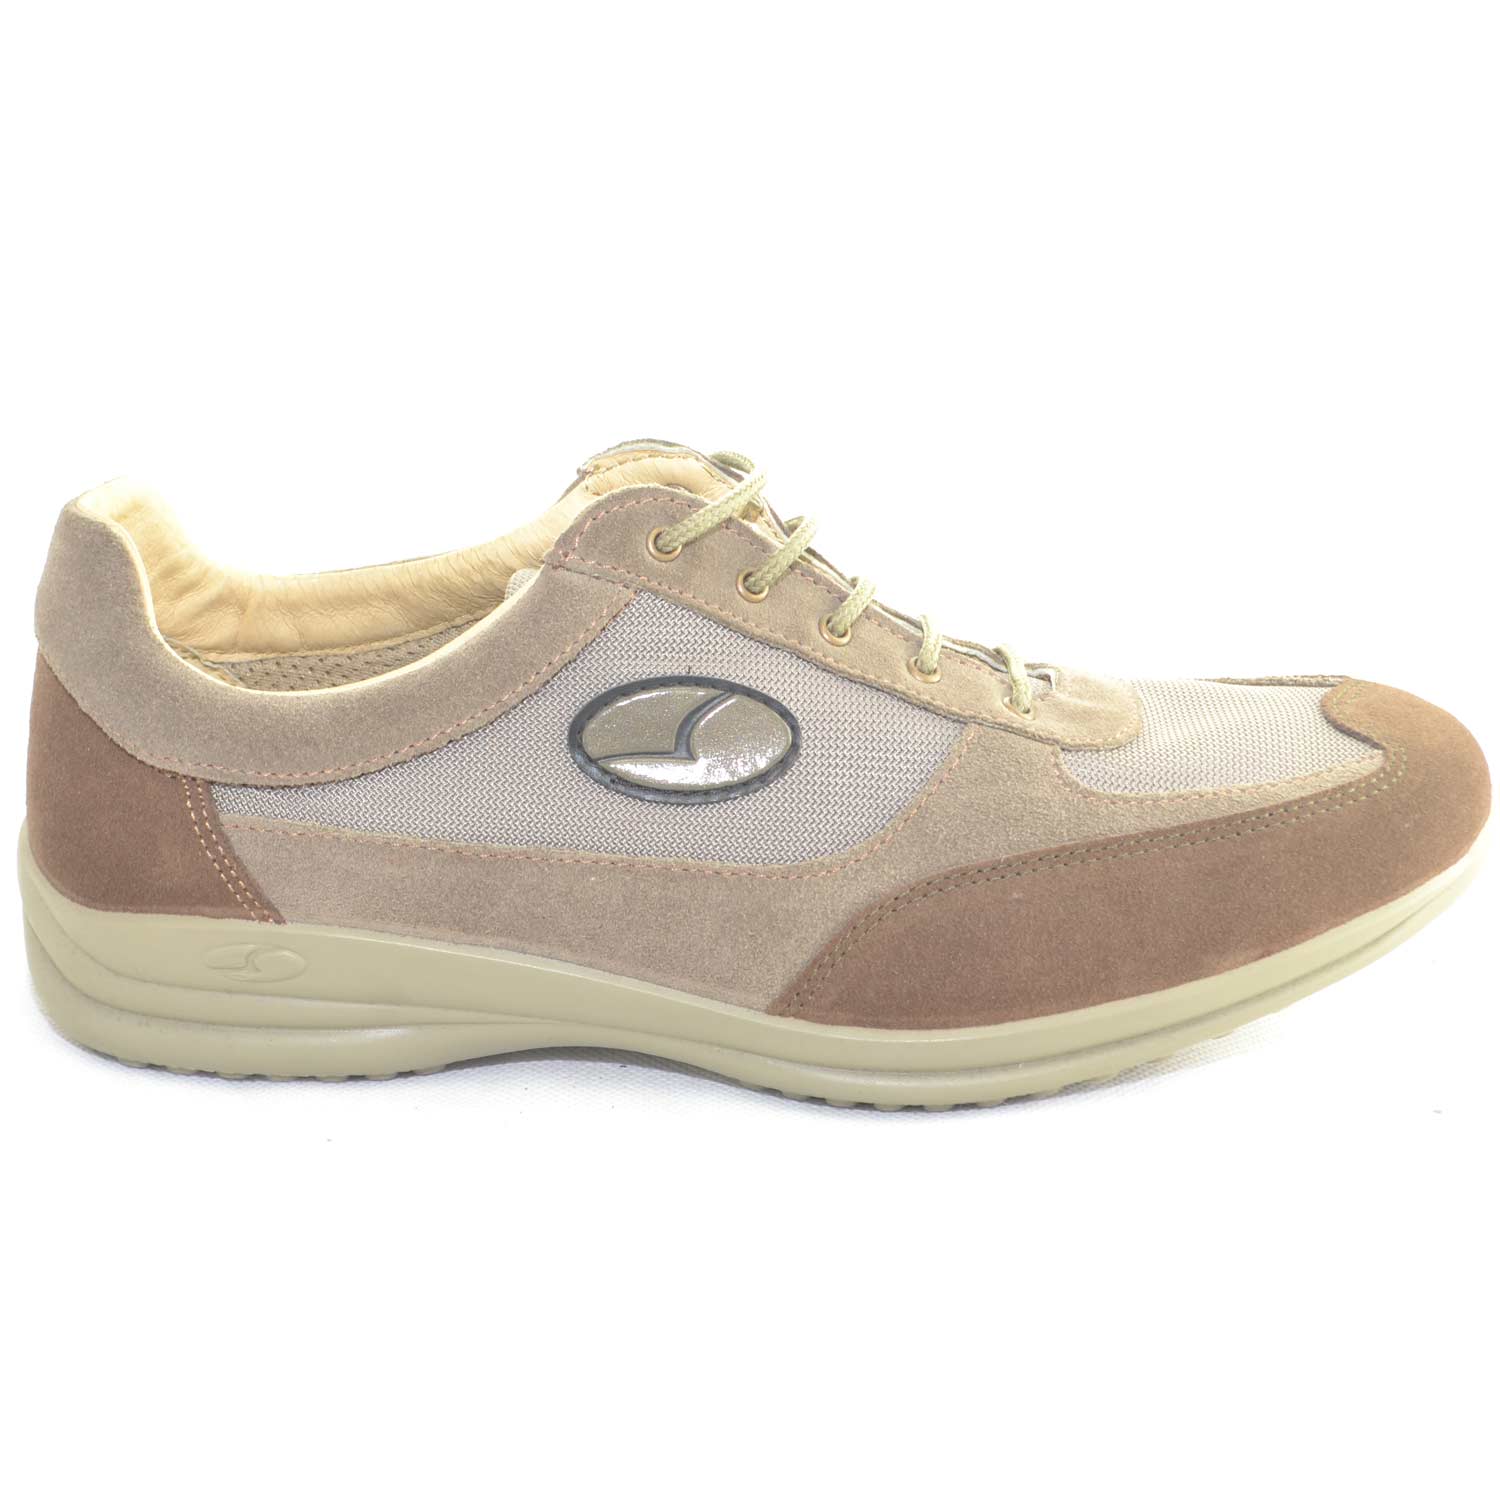 Sneakers Sportive Scarpe beige Uomo Light Step GRISPORT 8123 Made in Italy  Man Shoes comfort tessuto leggero e comode uomo comfort grisport | MaluShoes